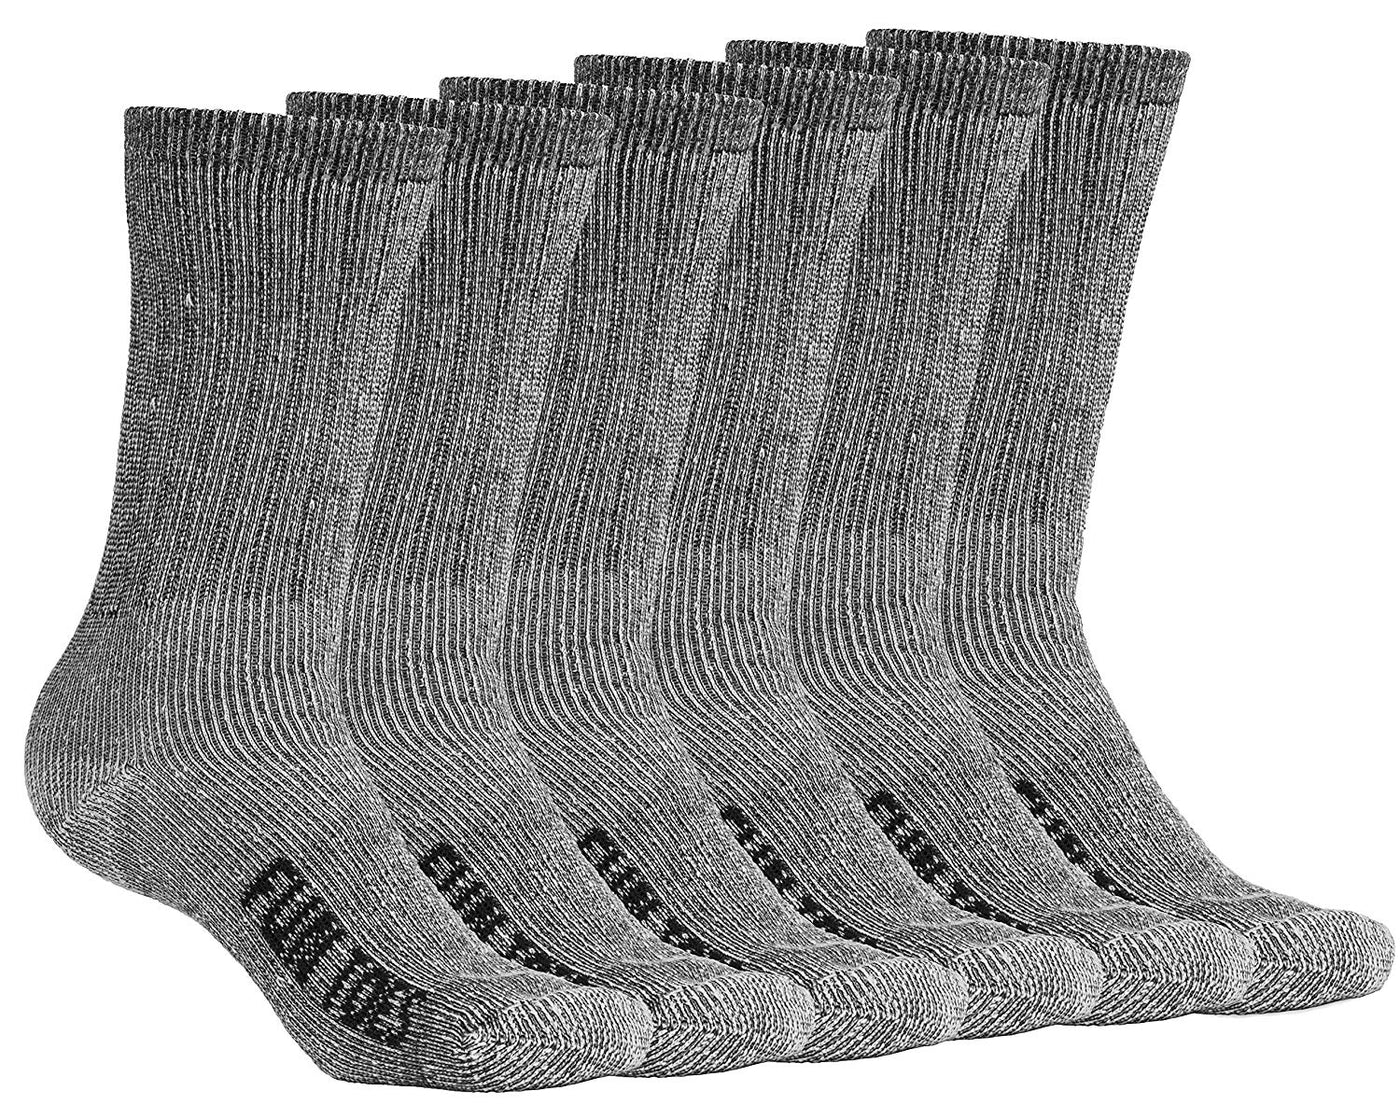 6 Pack: Men's Lightweight Merino Wool Winter Socks